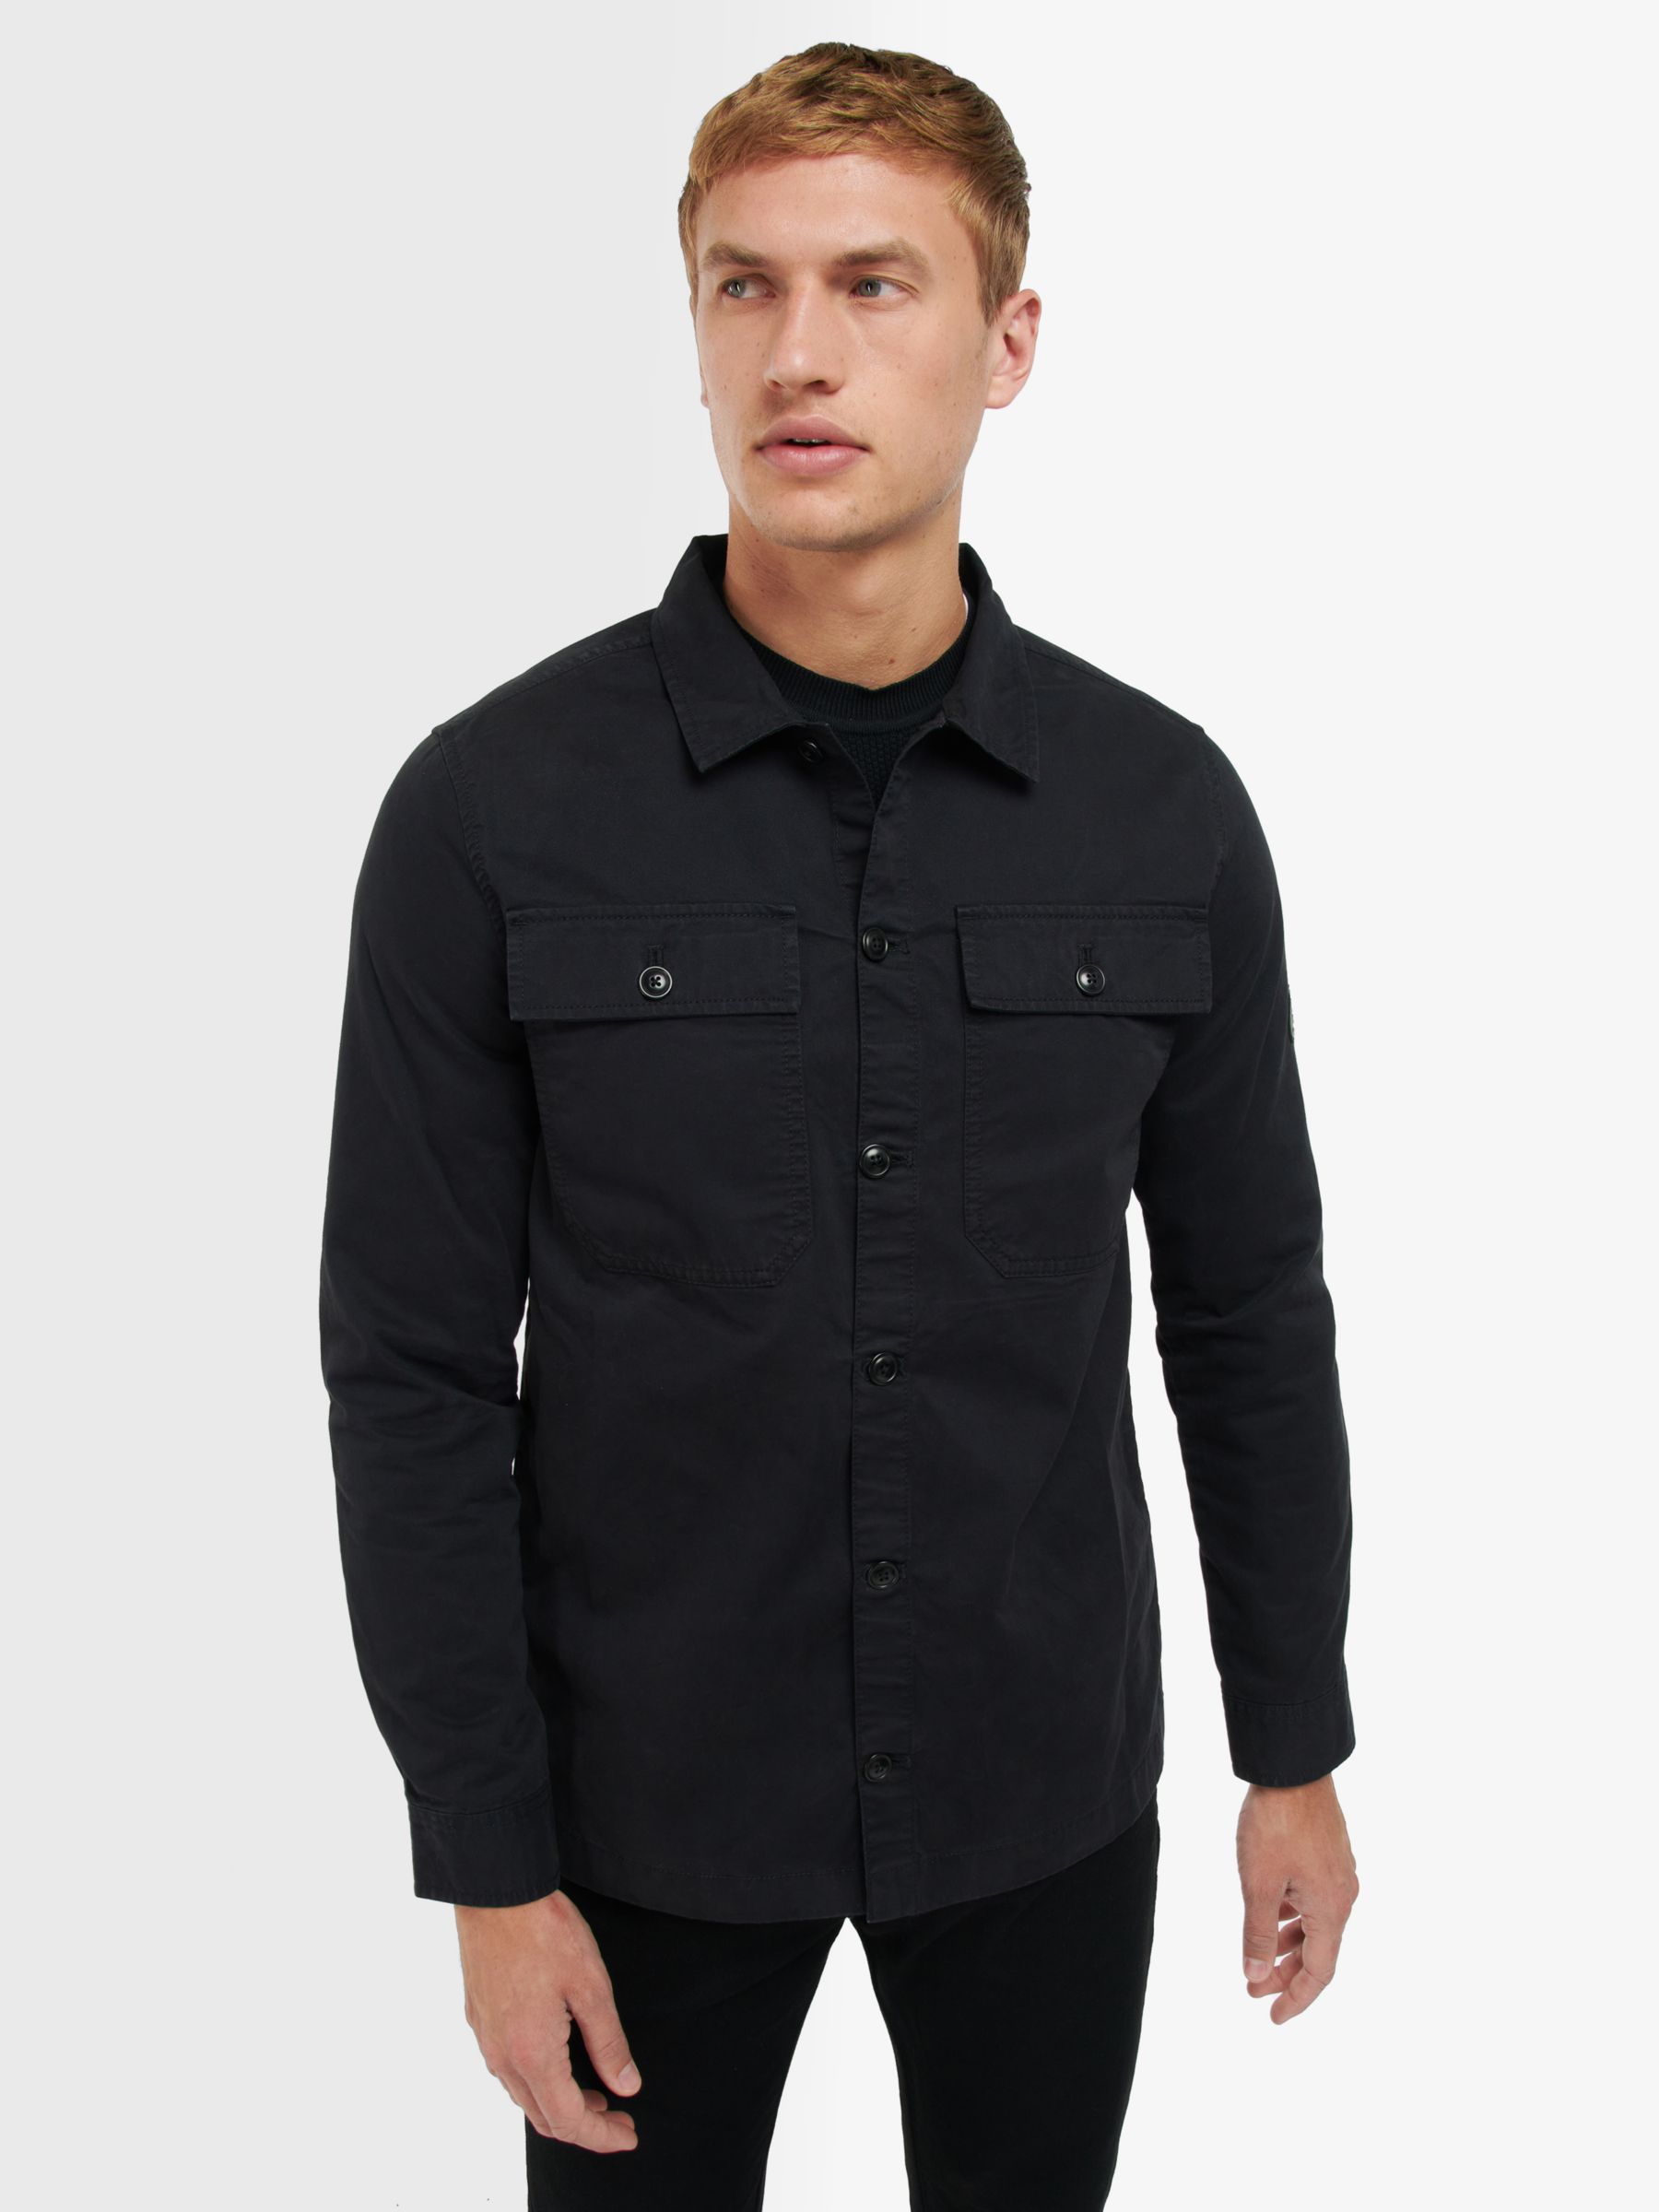 Barbour International Adey Cotton Overshirt, Black, S